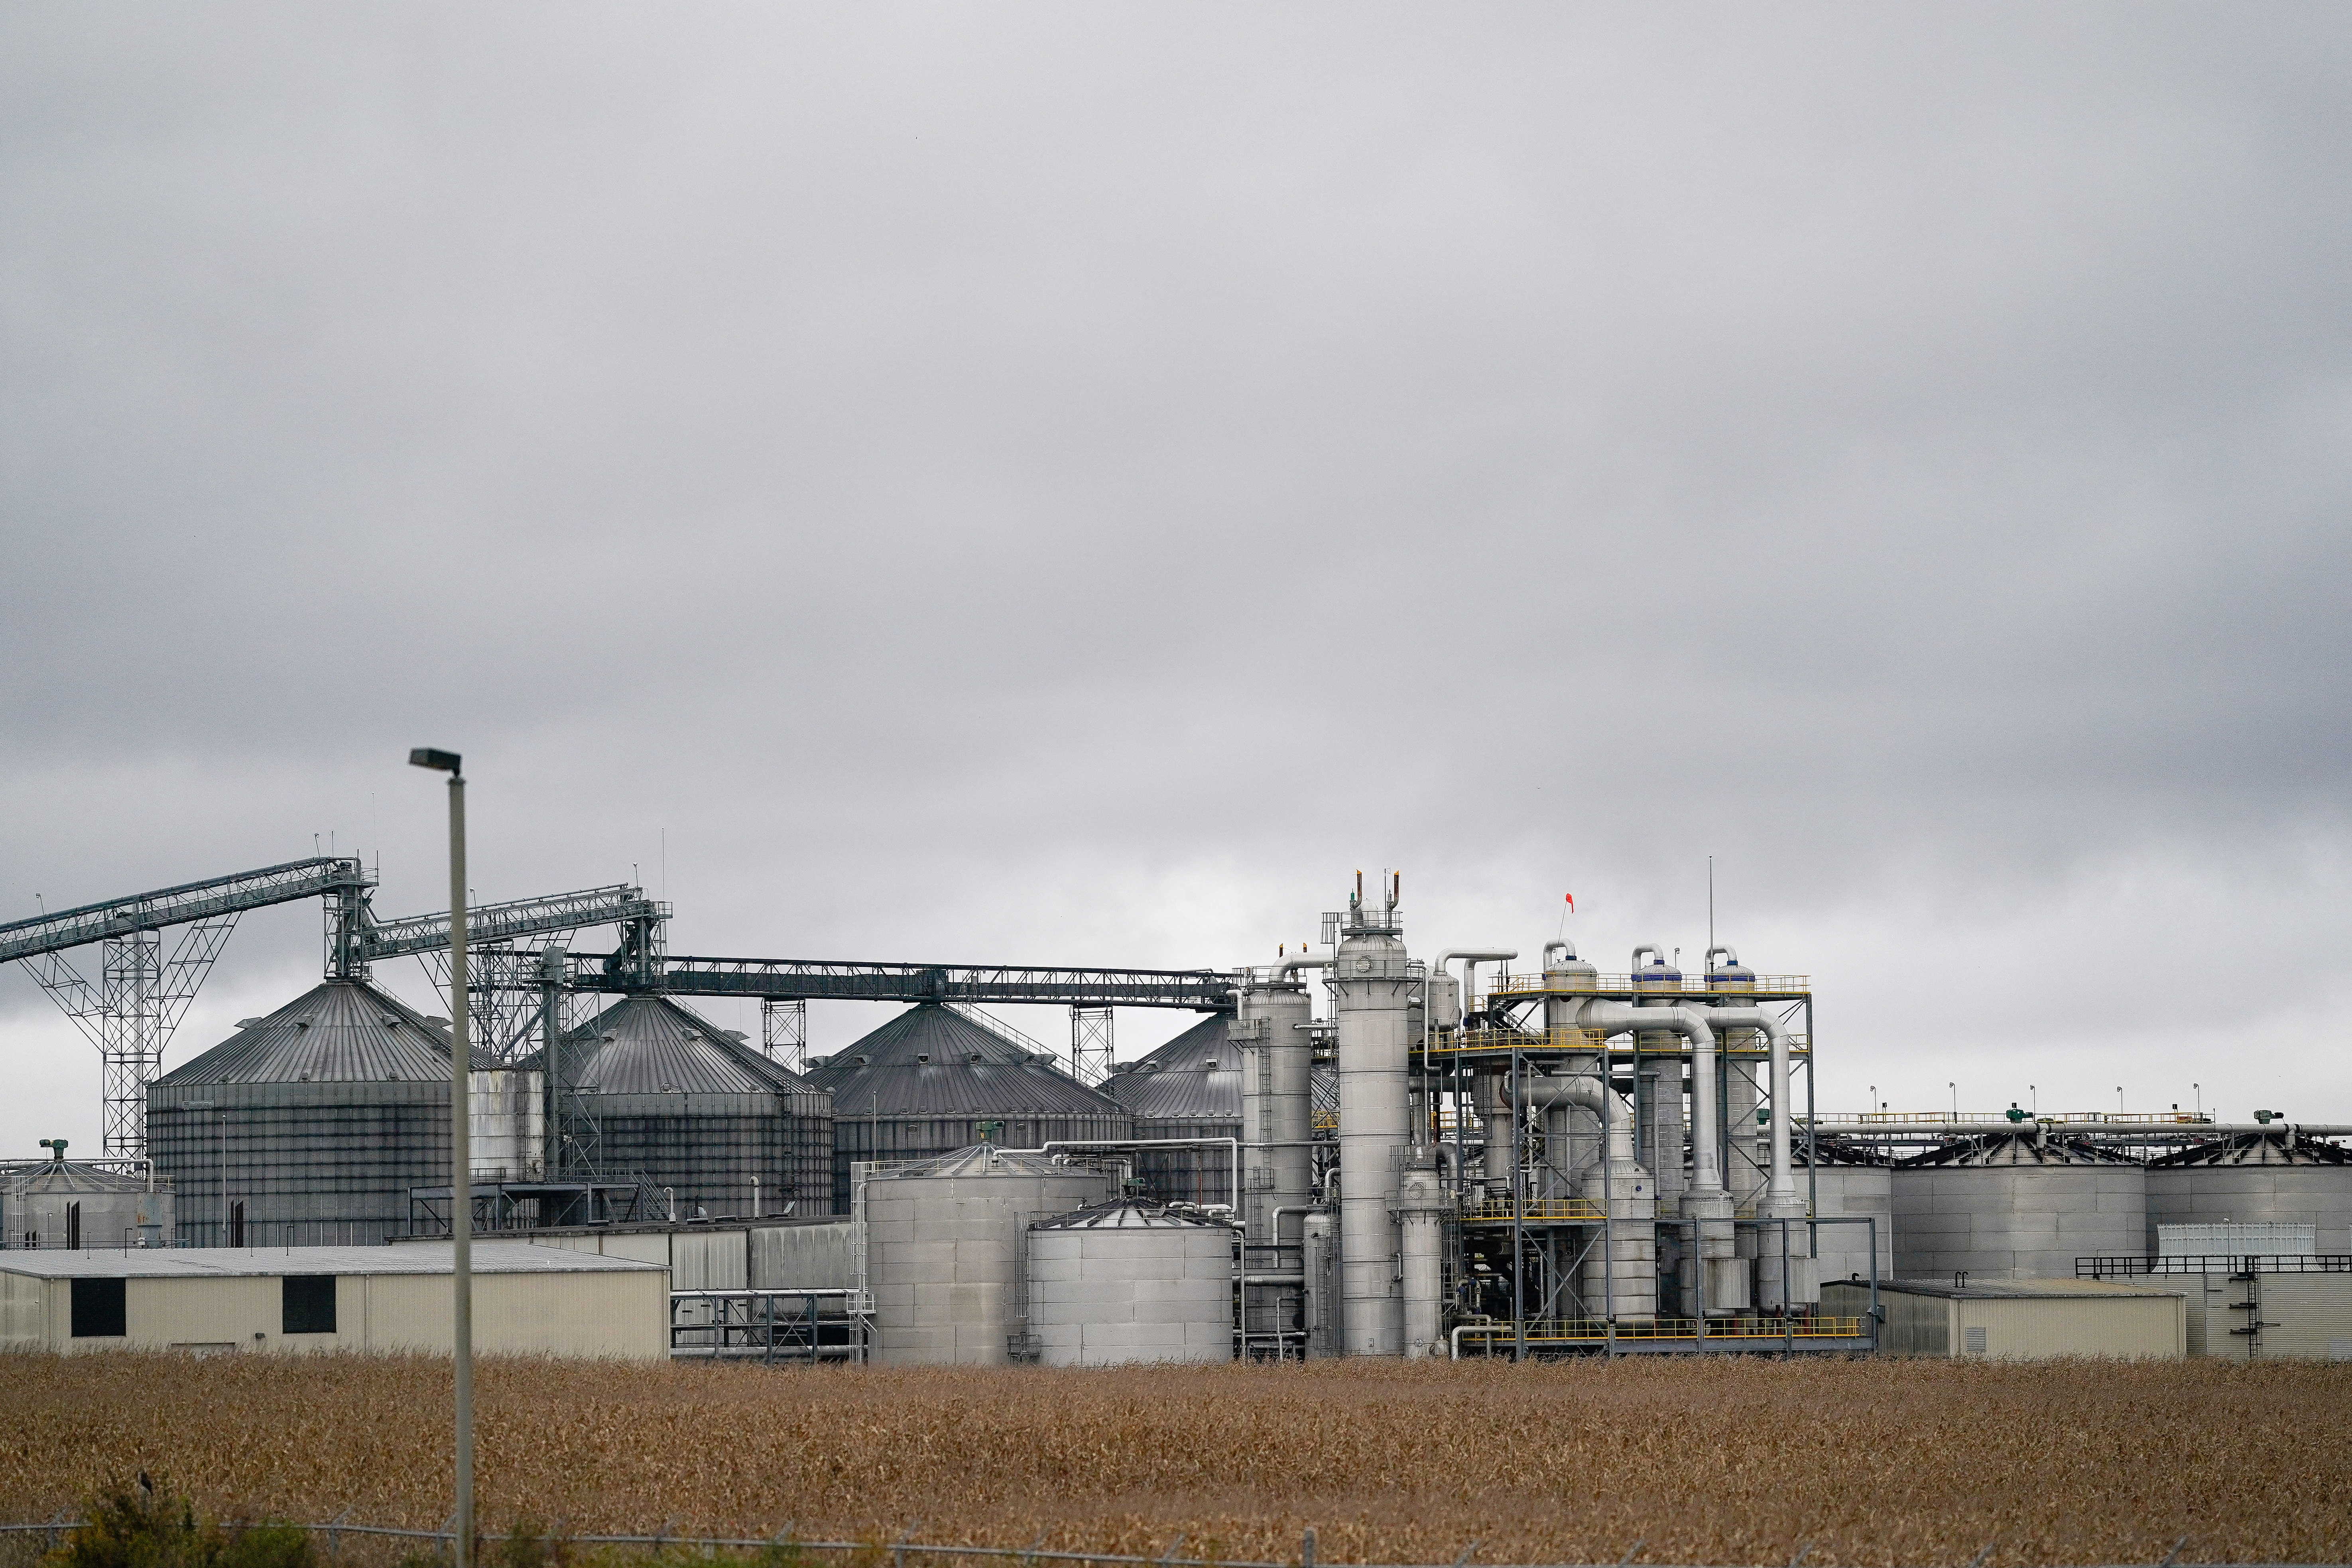 POET Biorefining plant in Cloverdale